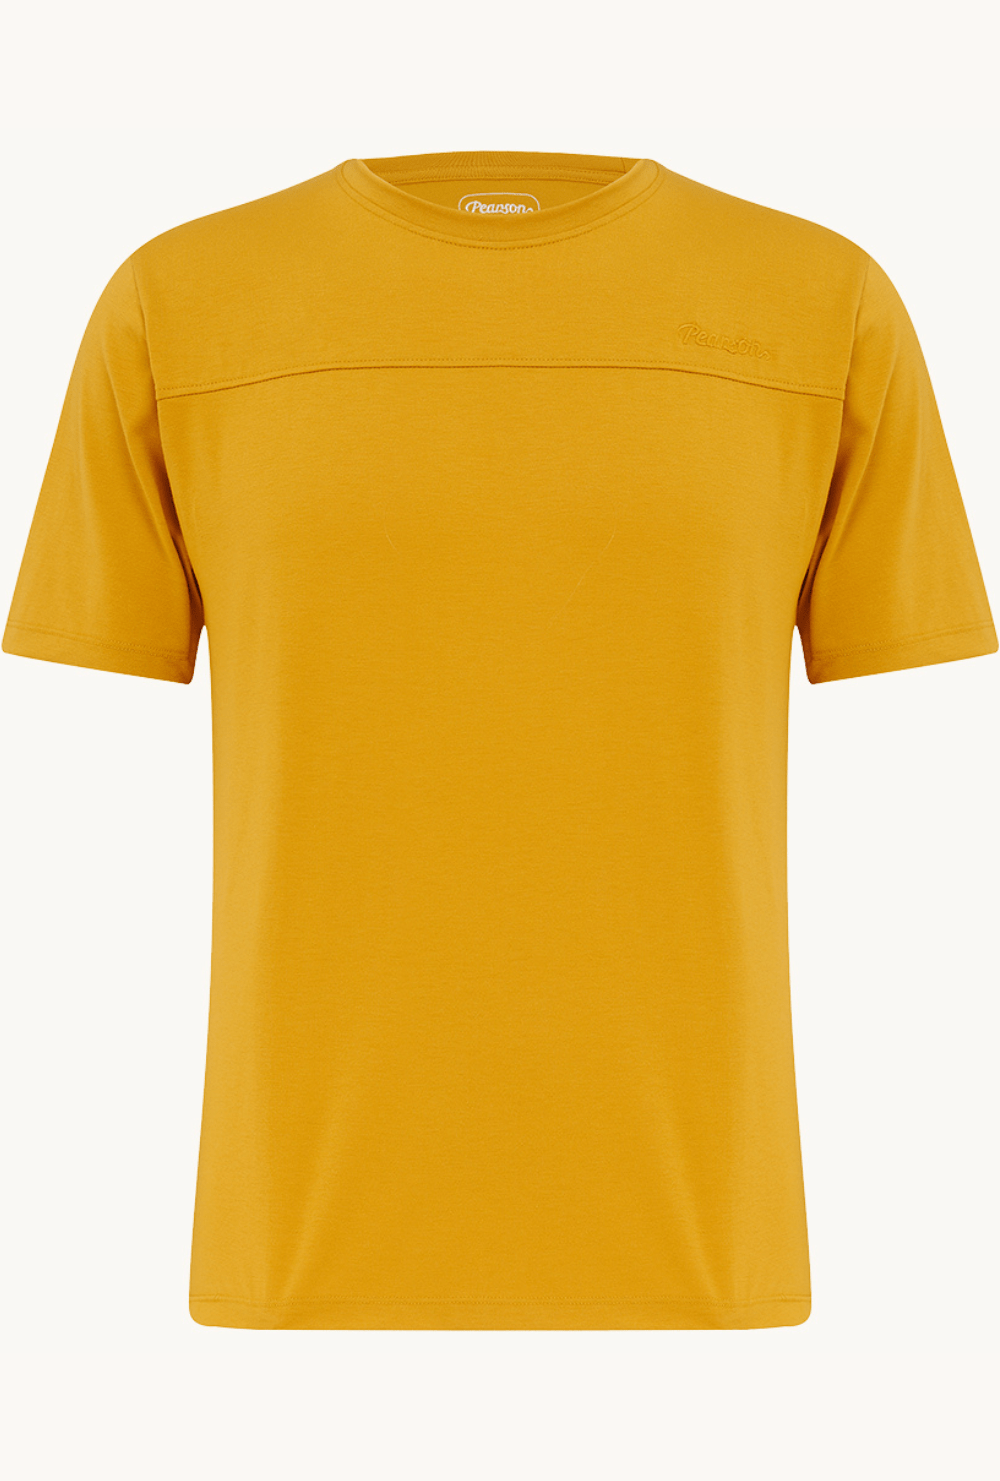 Pearson 1860  High DaysandHolidays - Cycling T-shirt Ochre  Ochre / Large